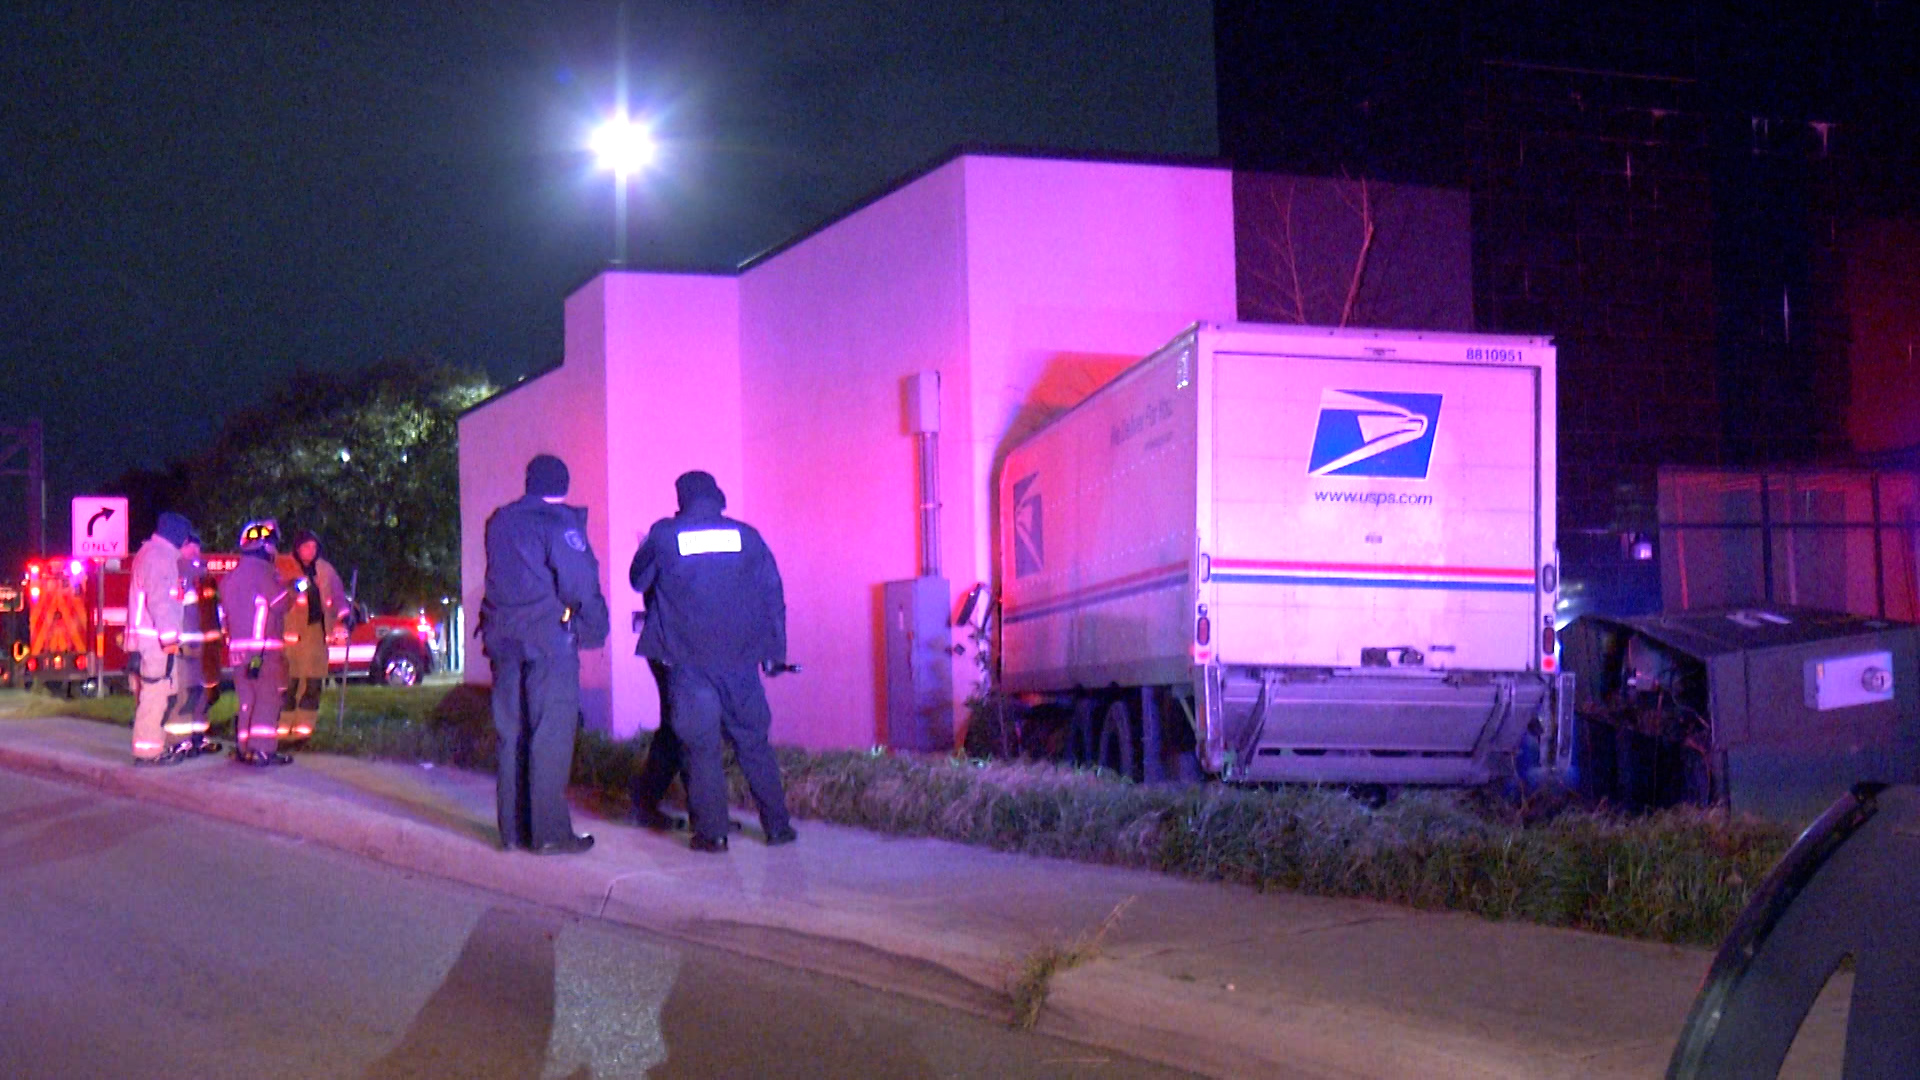 Driver of USPS falls asleep, crashes into San Antonio clinic